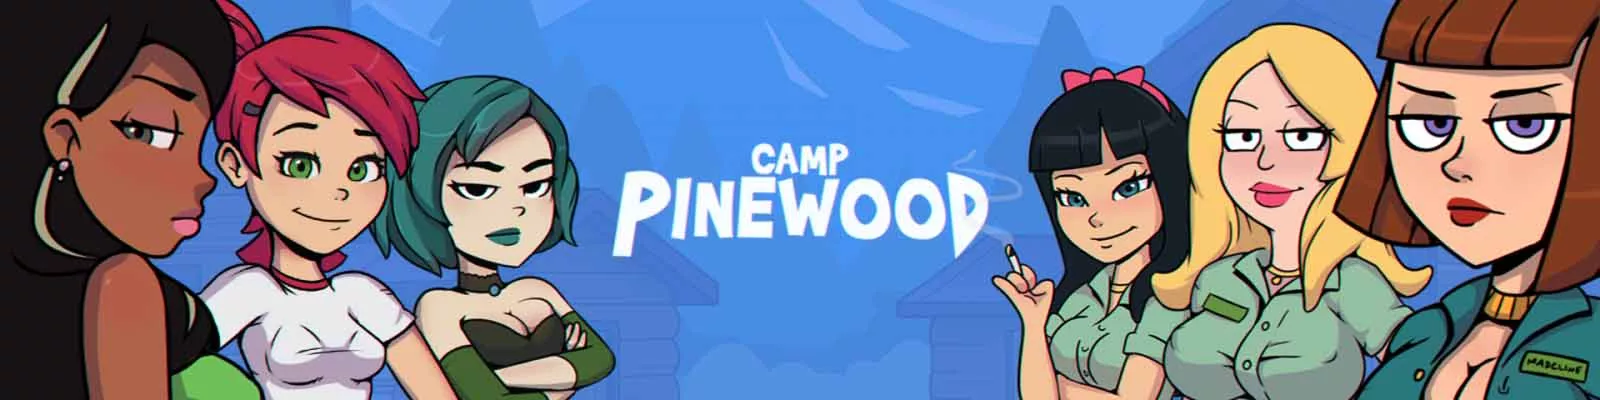 Camp Pinewood voksenspill